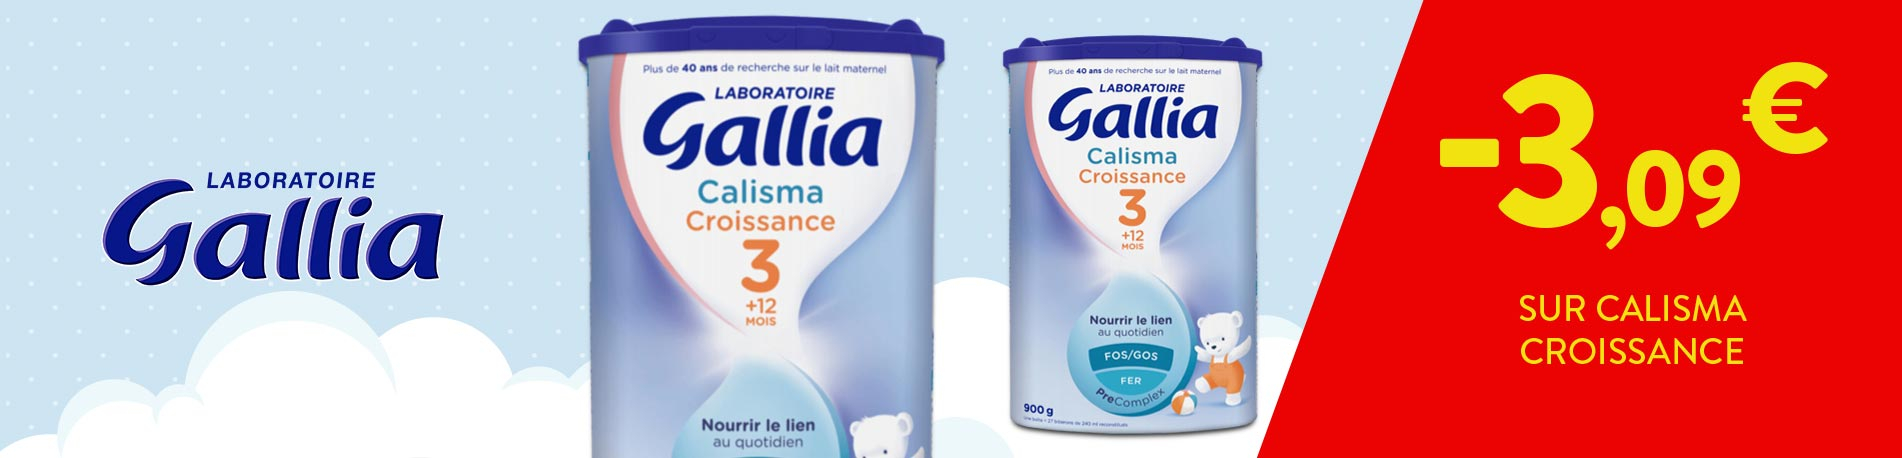 Promotion Gallia calisma croissance